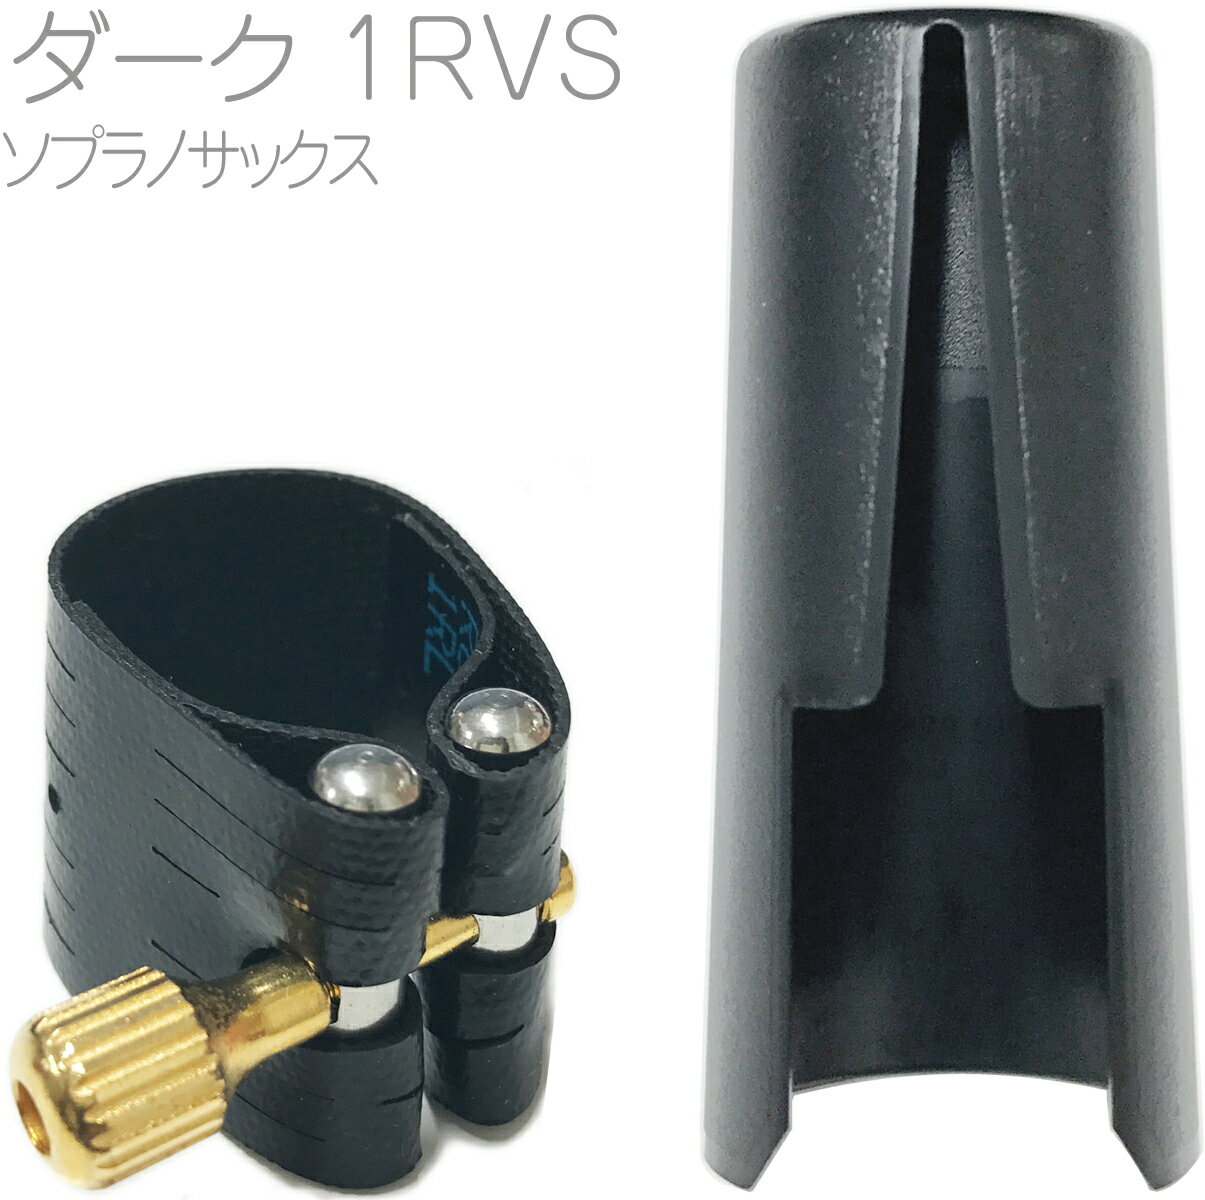 Rovner ( ロブナー ) 1RVS ソプラノサックス ラバー用